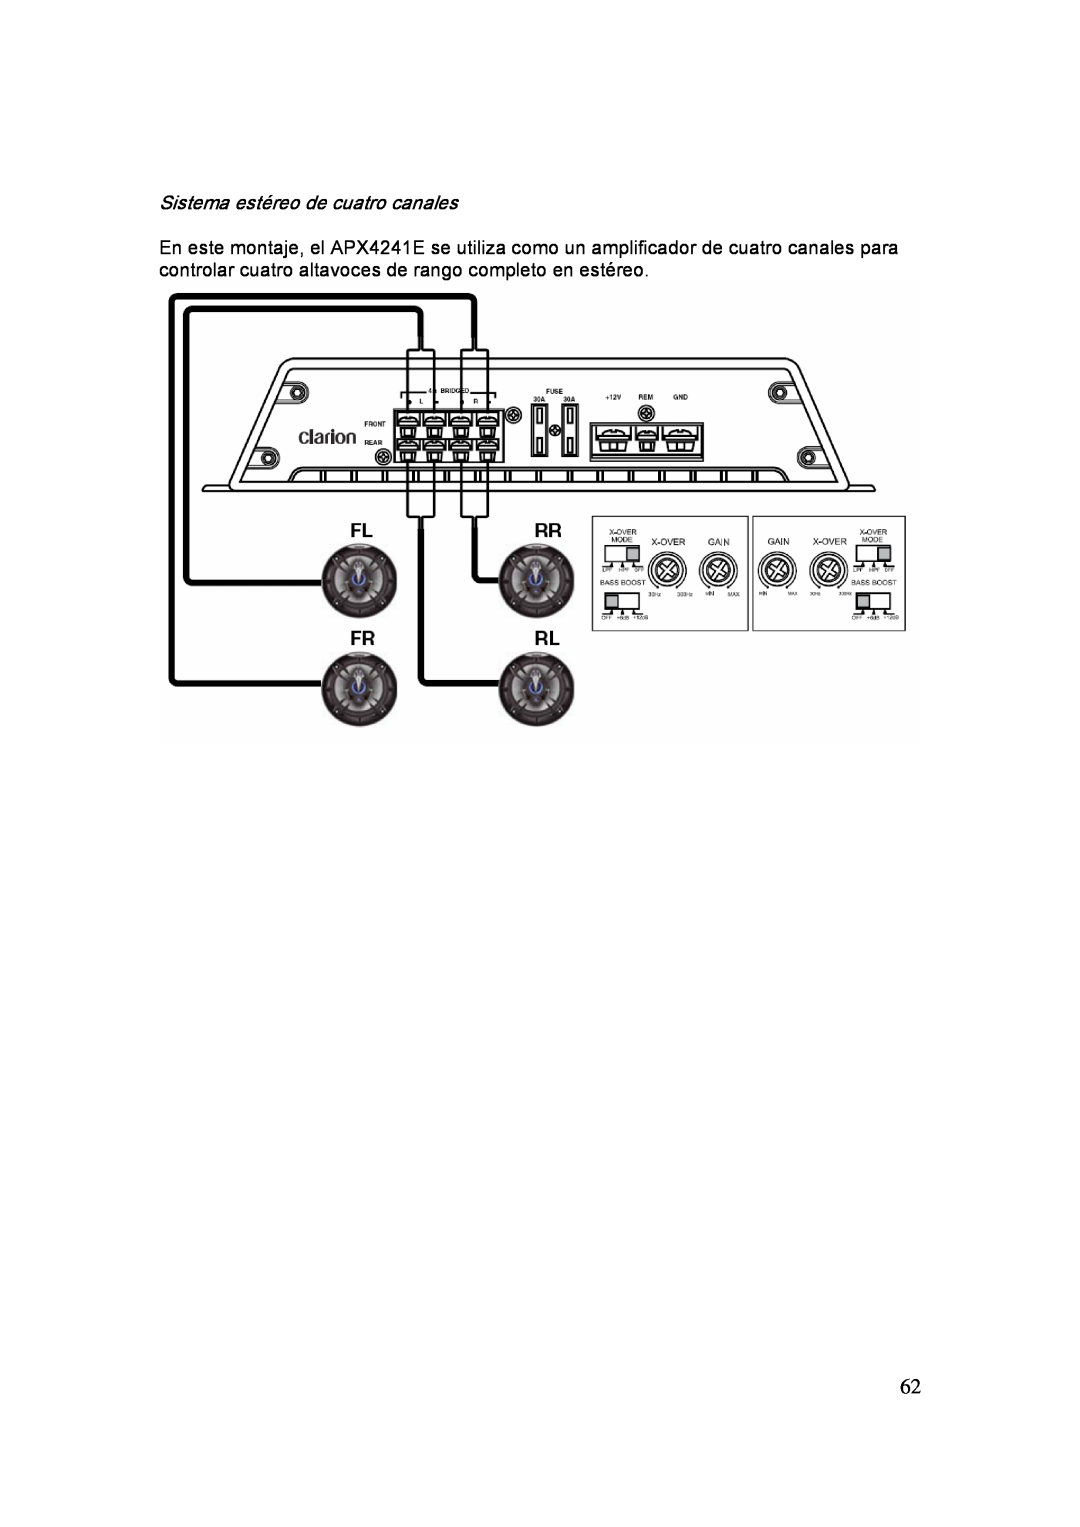 Clarion APX2121E, APX1301E, APX4241E manual Sistema estéreo de cuatro canales 